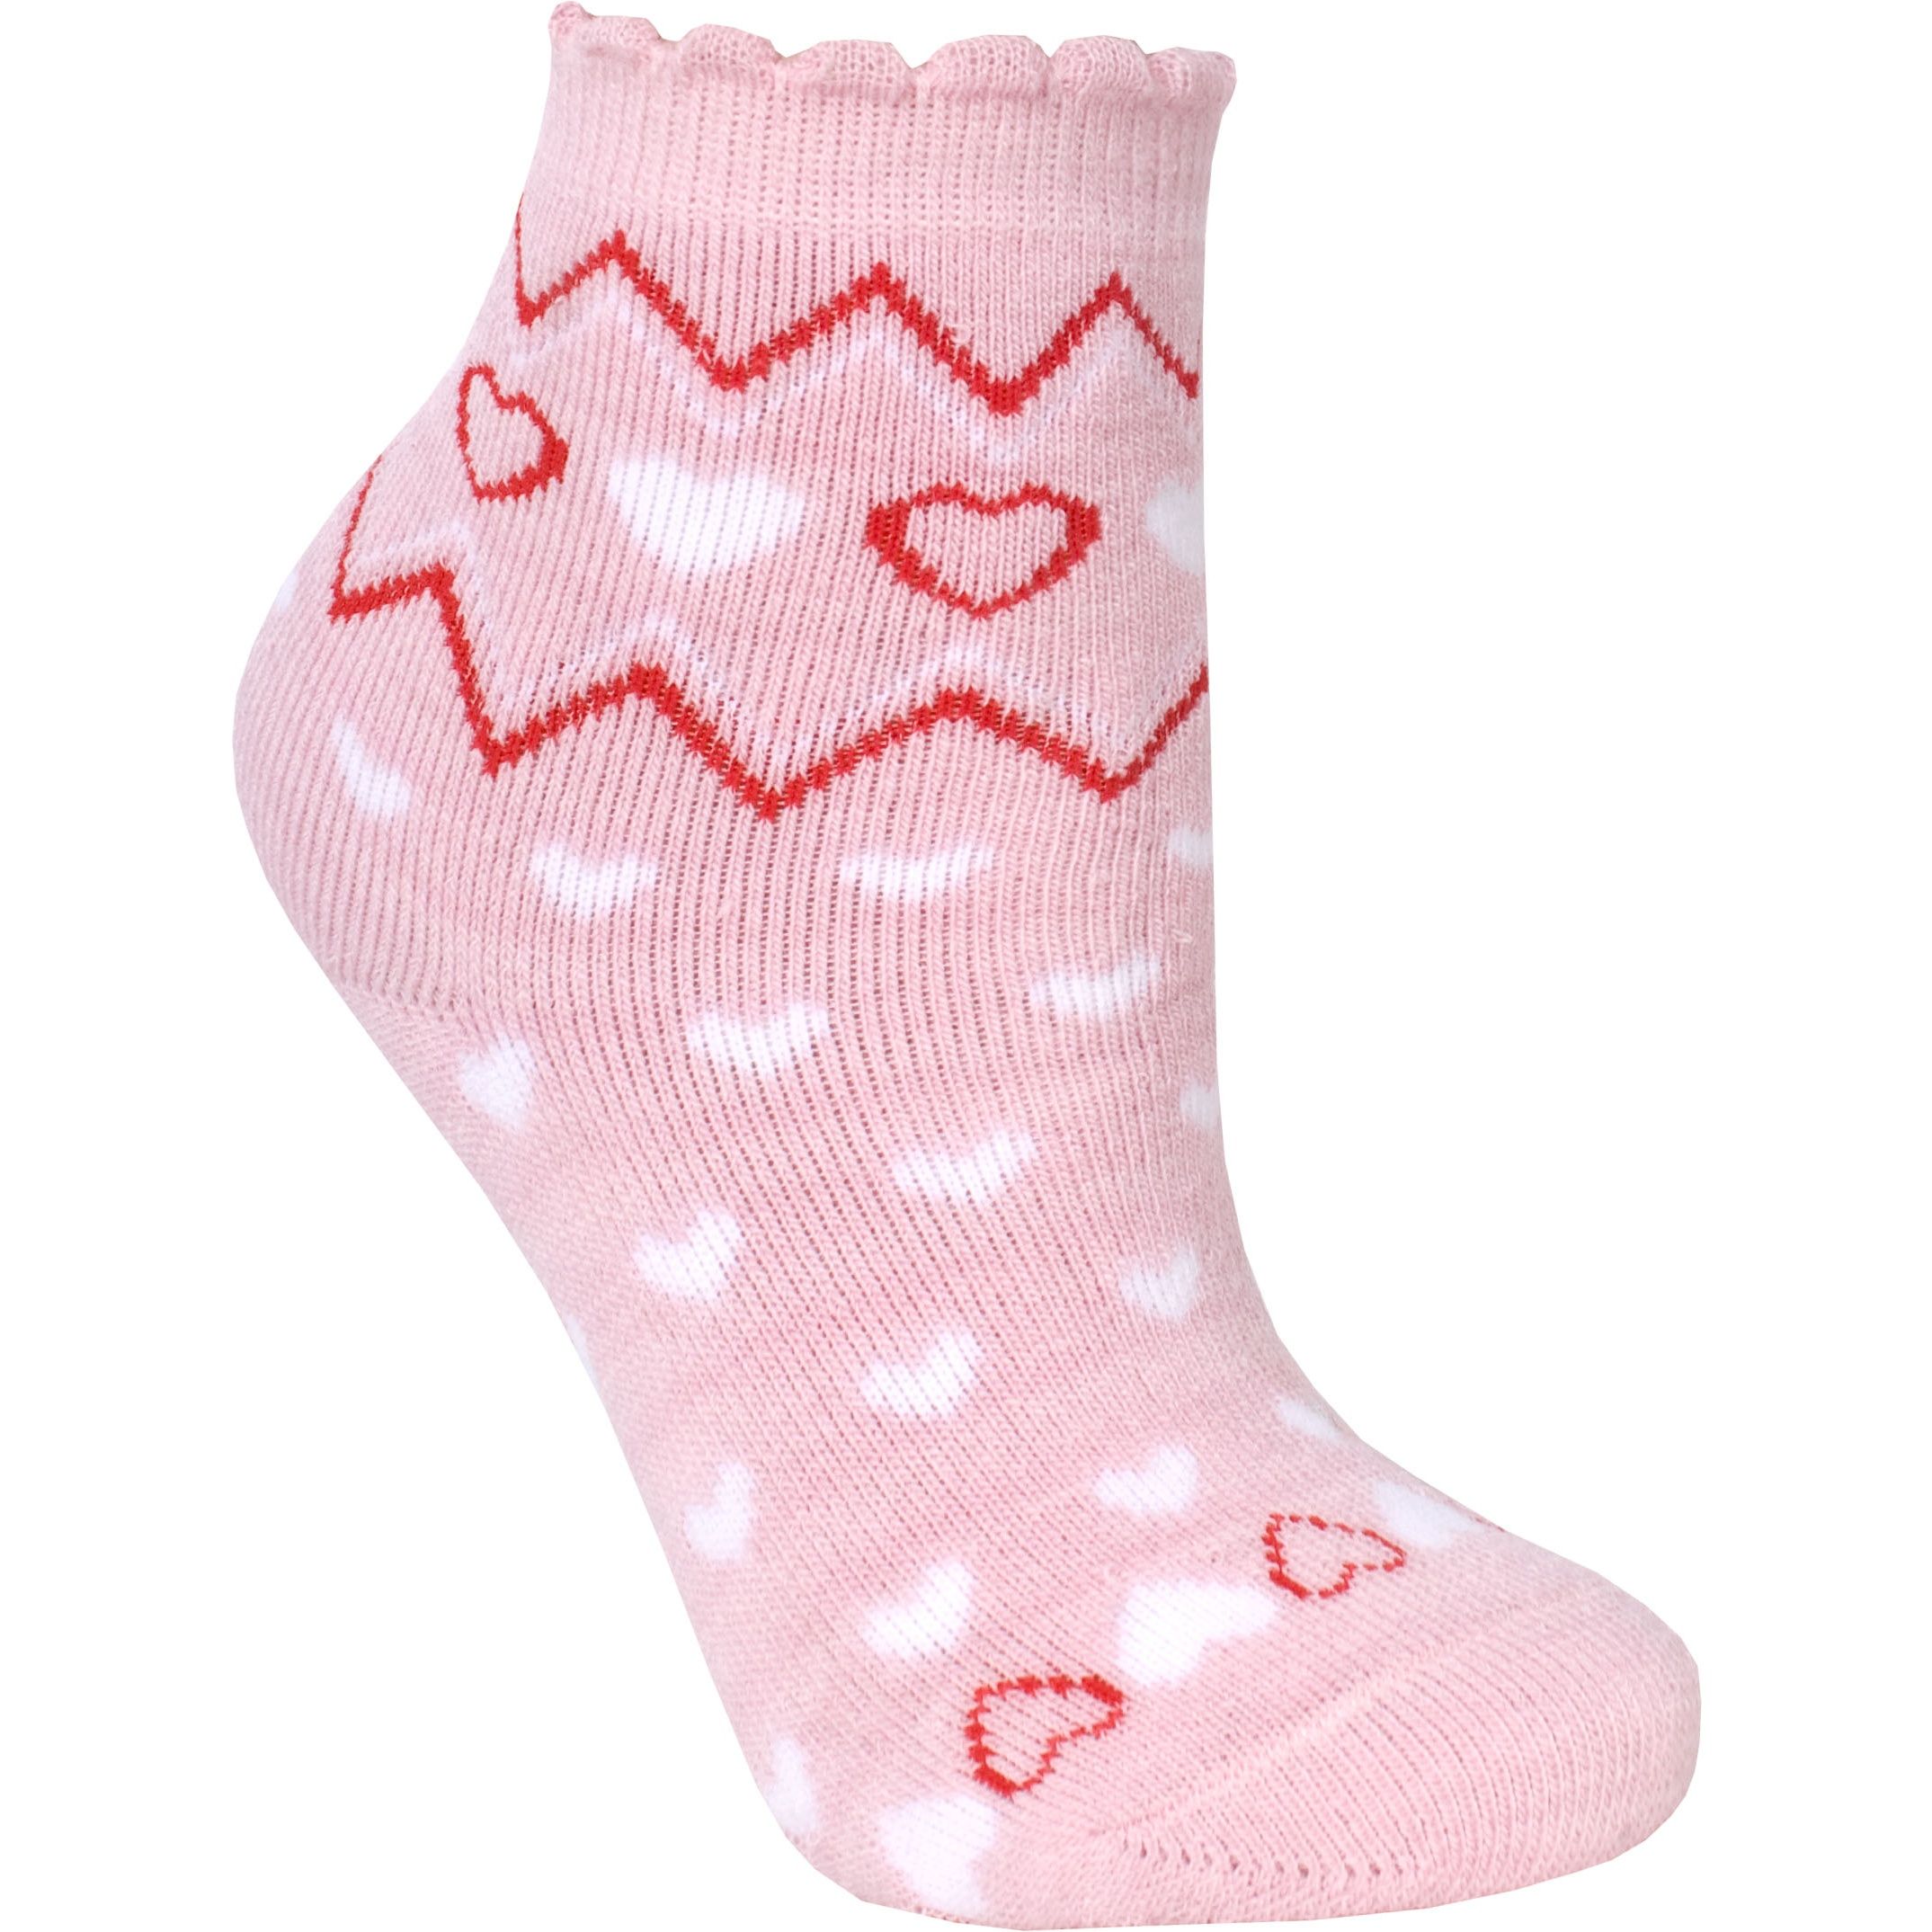 Kids patterned socks. 80% Acrylic, 5% Nylon, 14% Spandex, 1% Elastic.